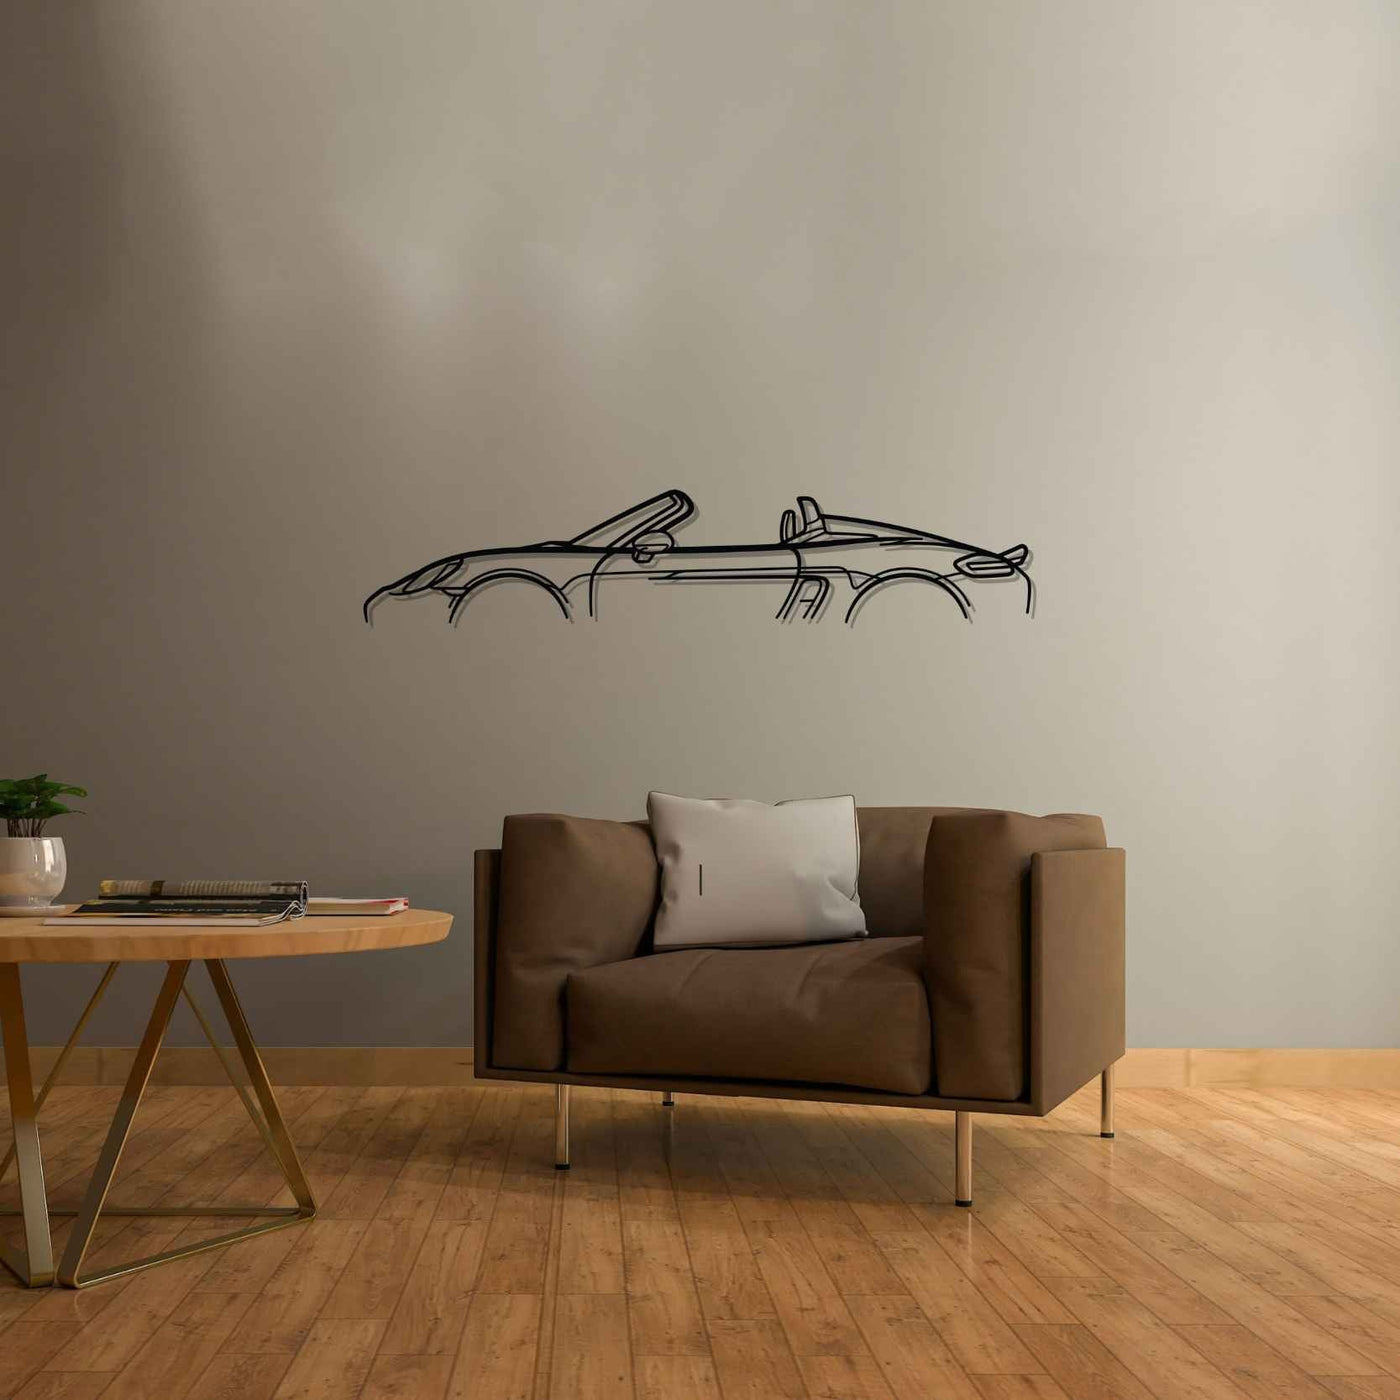 718 Spyder Classic Silhouette Metal Wall Art